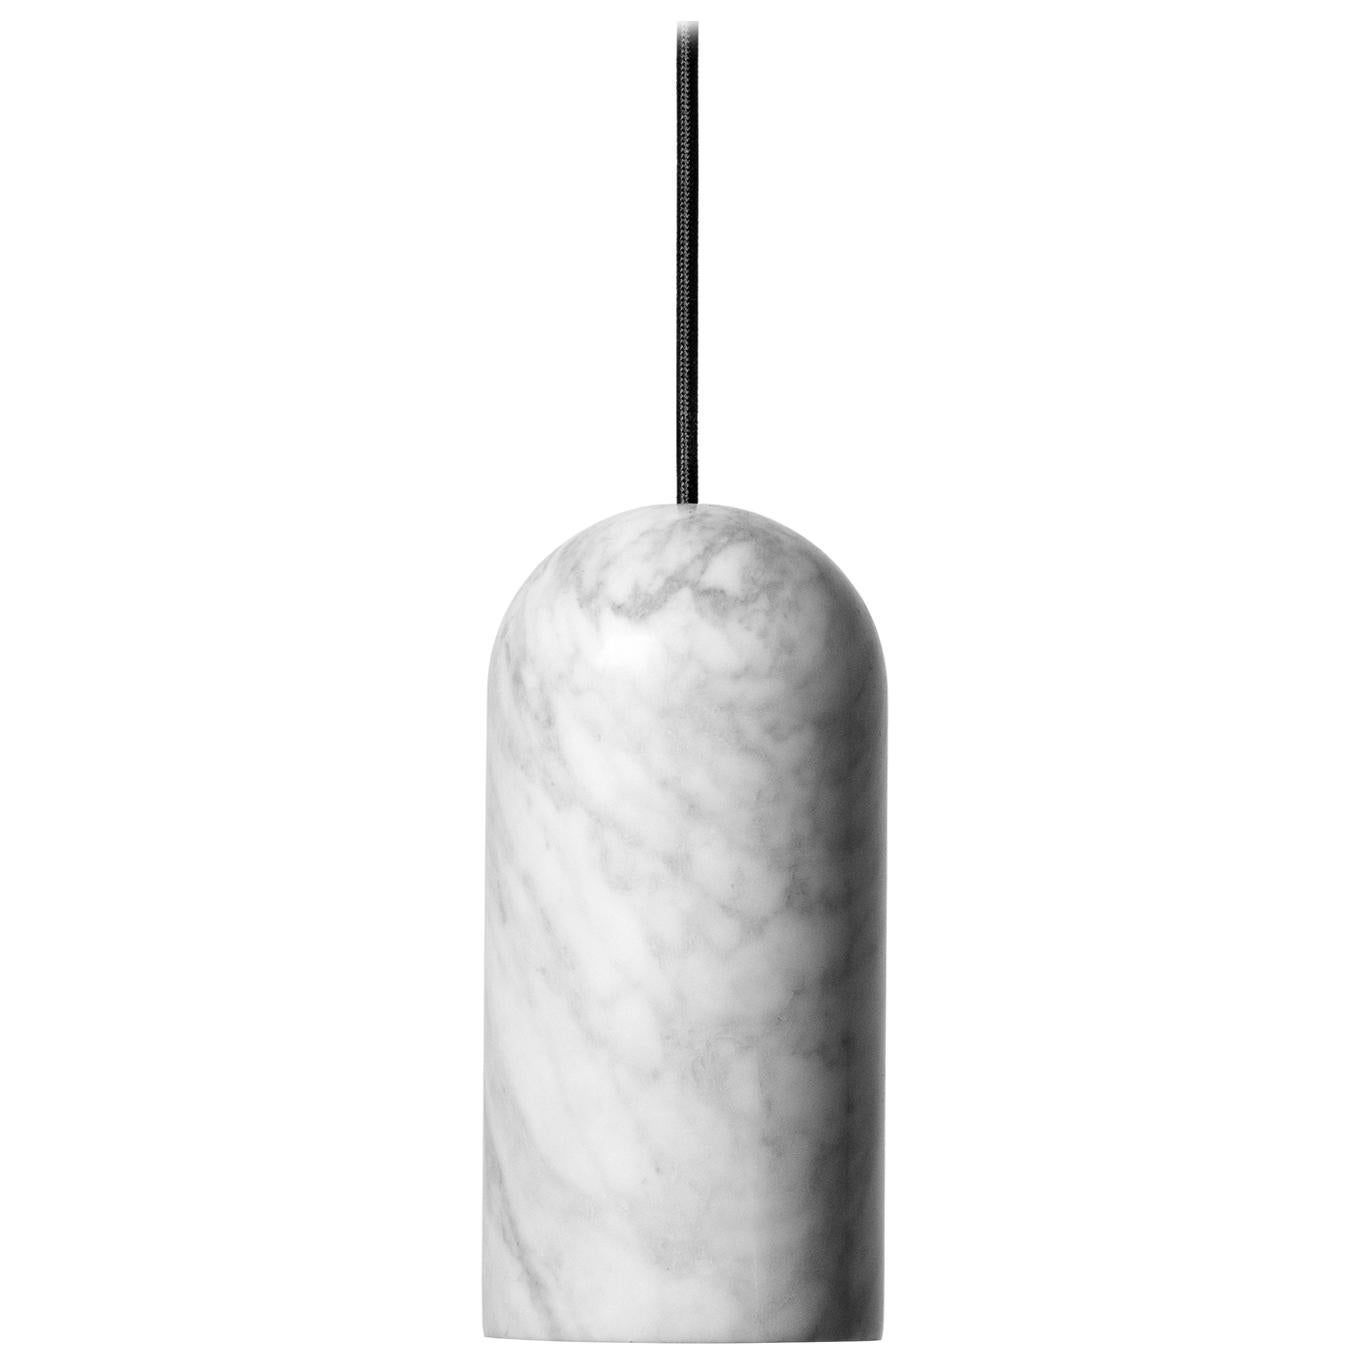 Venato Carrara and Aluminum Pendant Light, “U2, ” by Buzao